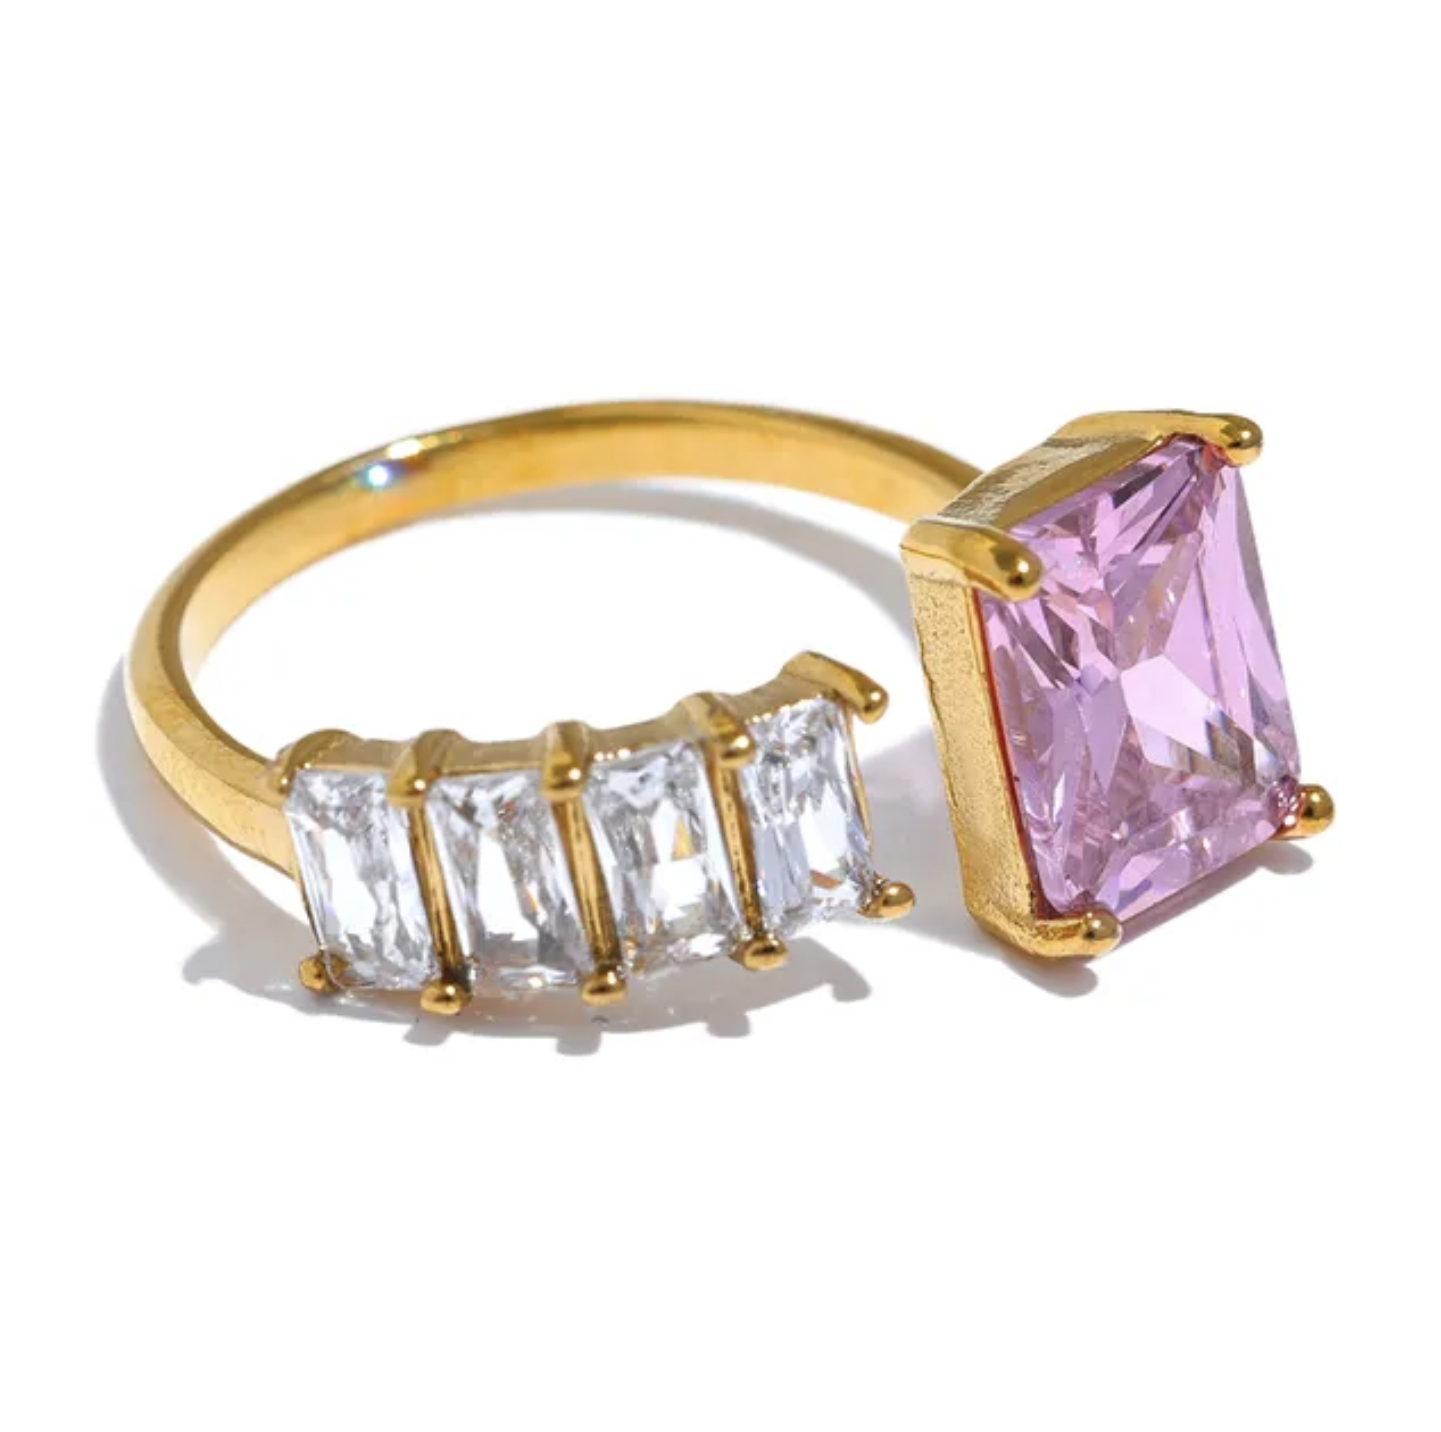 FARAH - Faux Diamond Gemstones Rings - Gifts for Her (wedding, bridesmaid, bride, birthday, Eid, Holidays..)